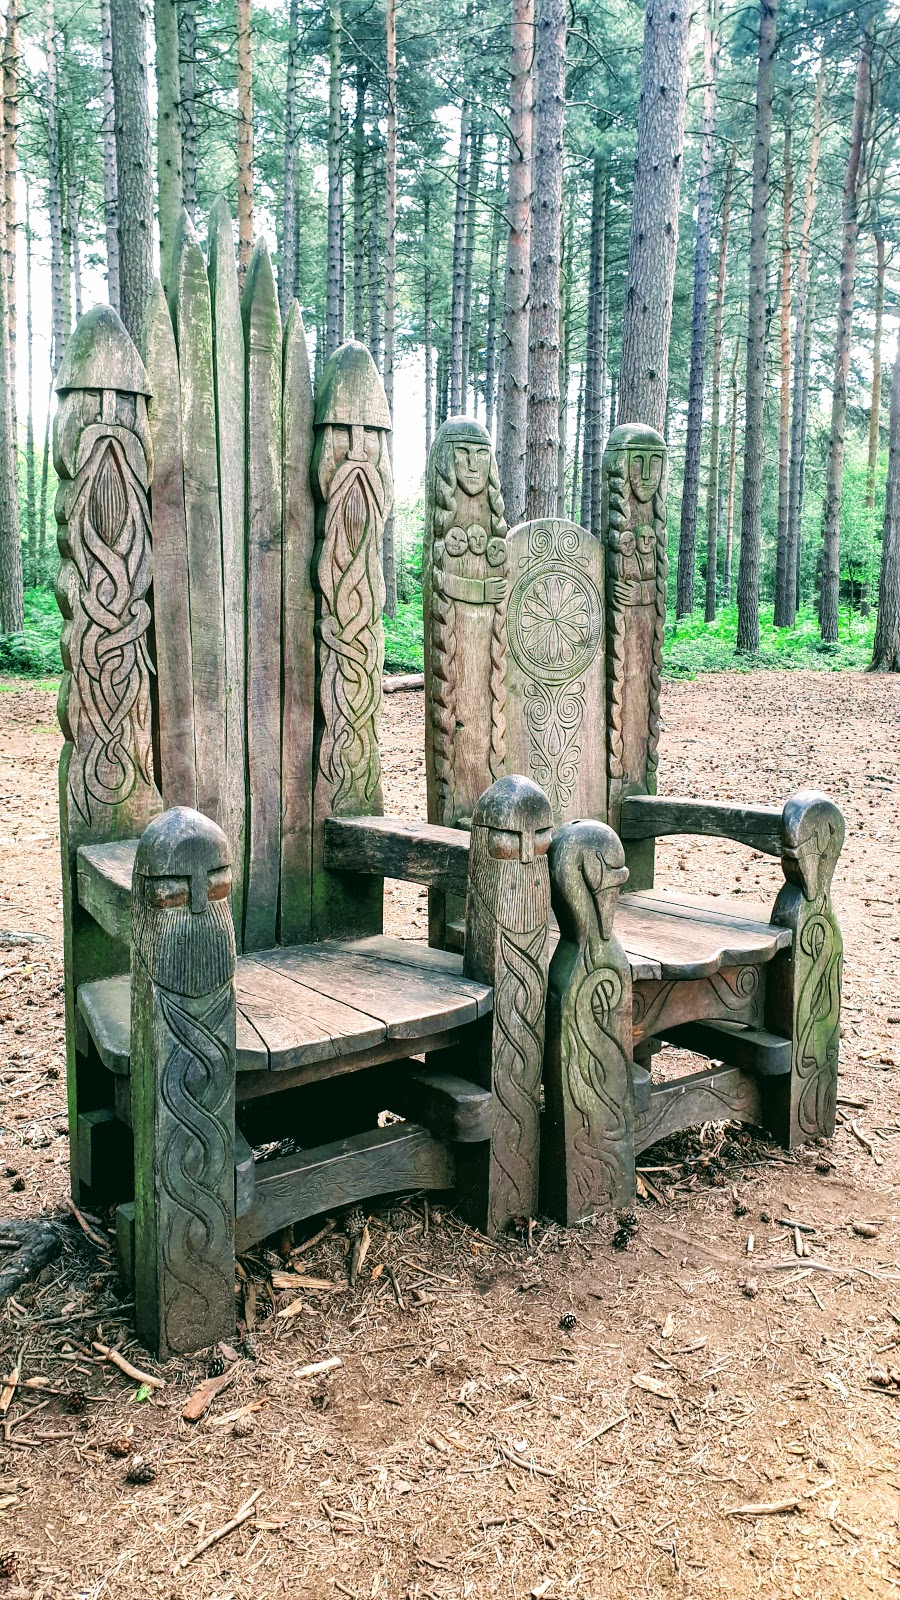 Wooden seats